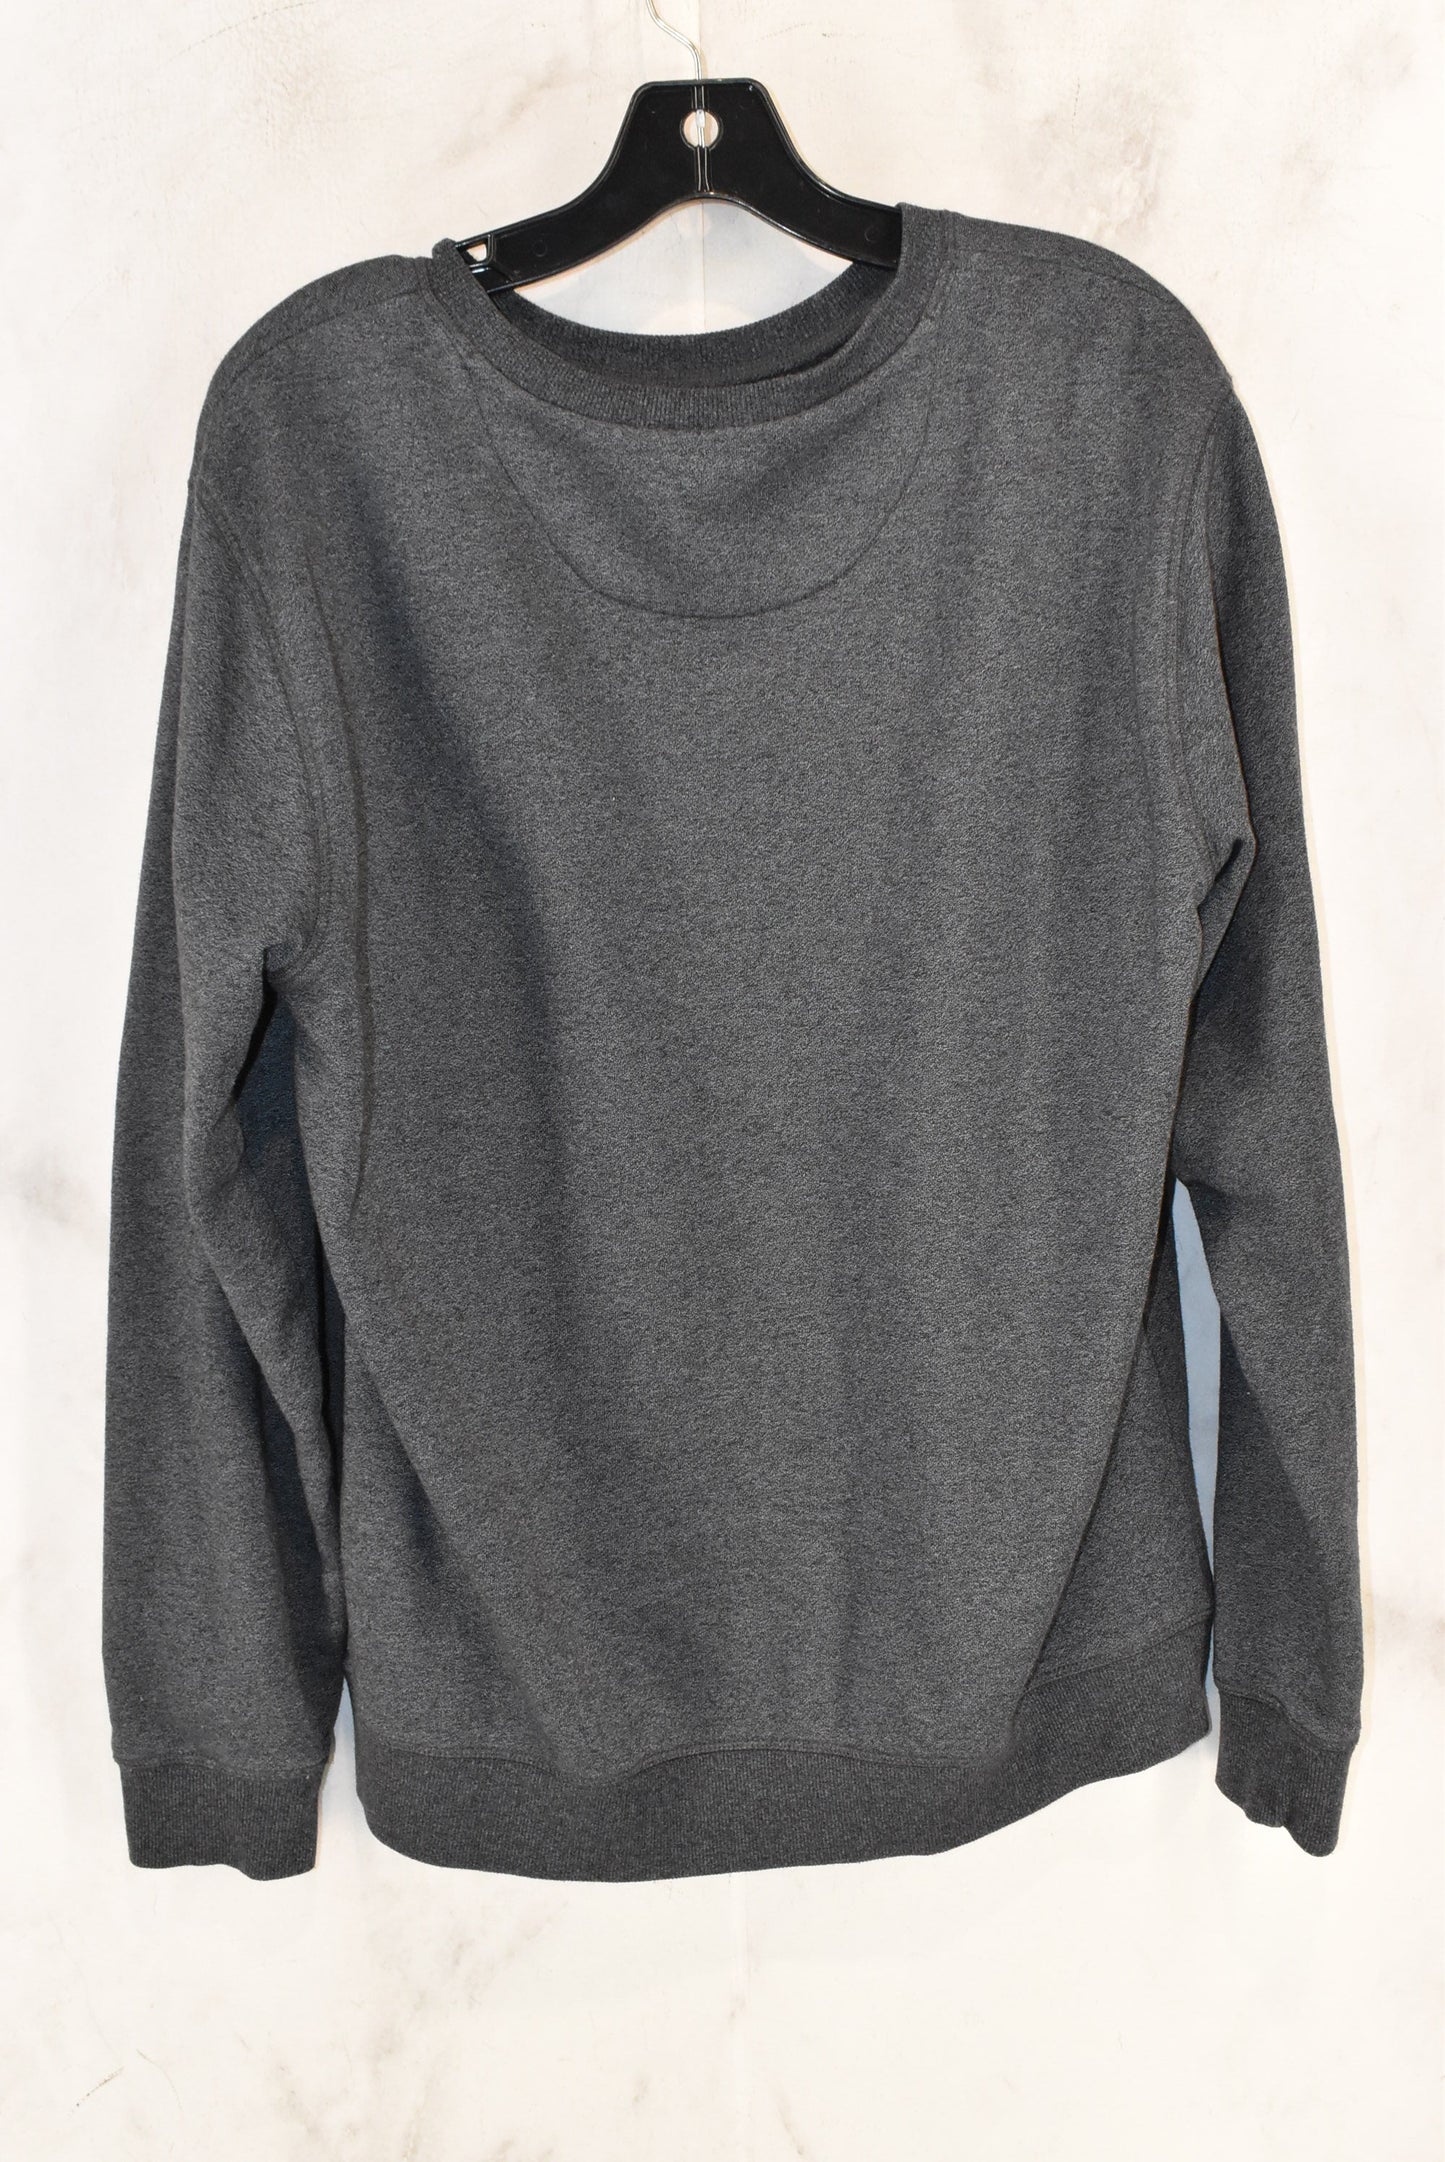 Sweatshirt Crewneck By Dip  Size: L